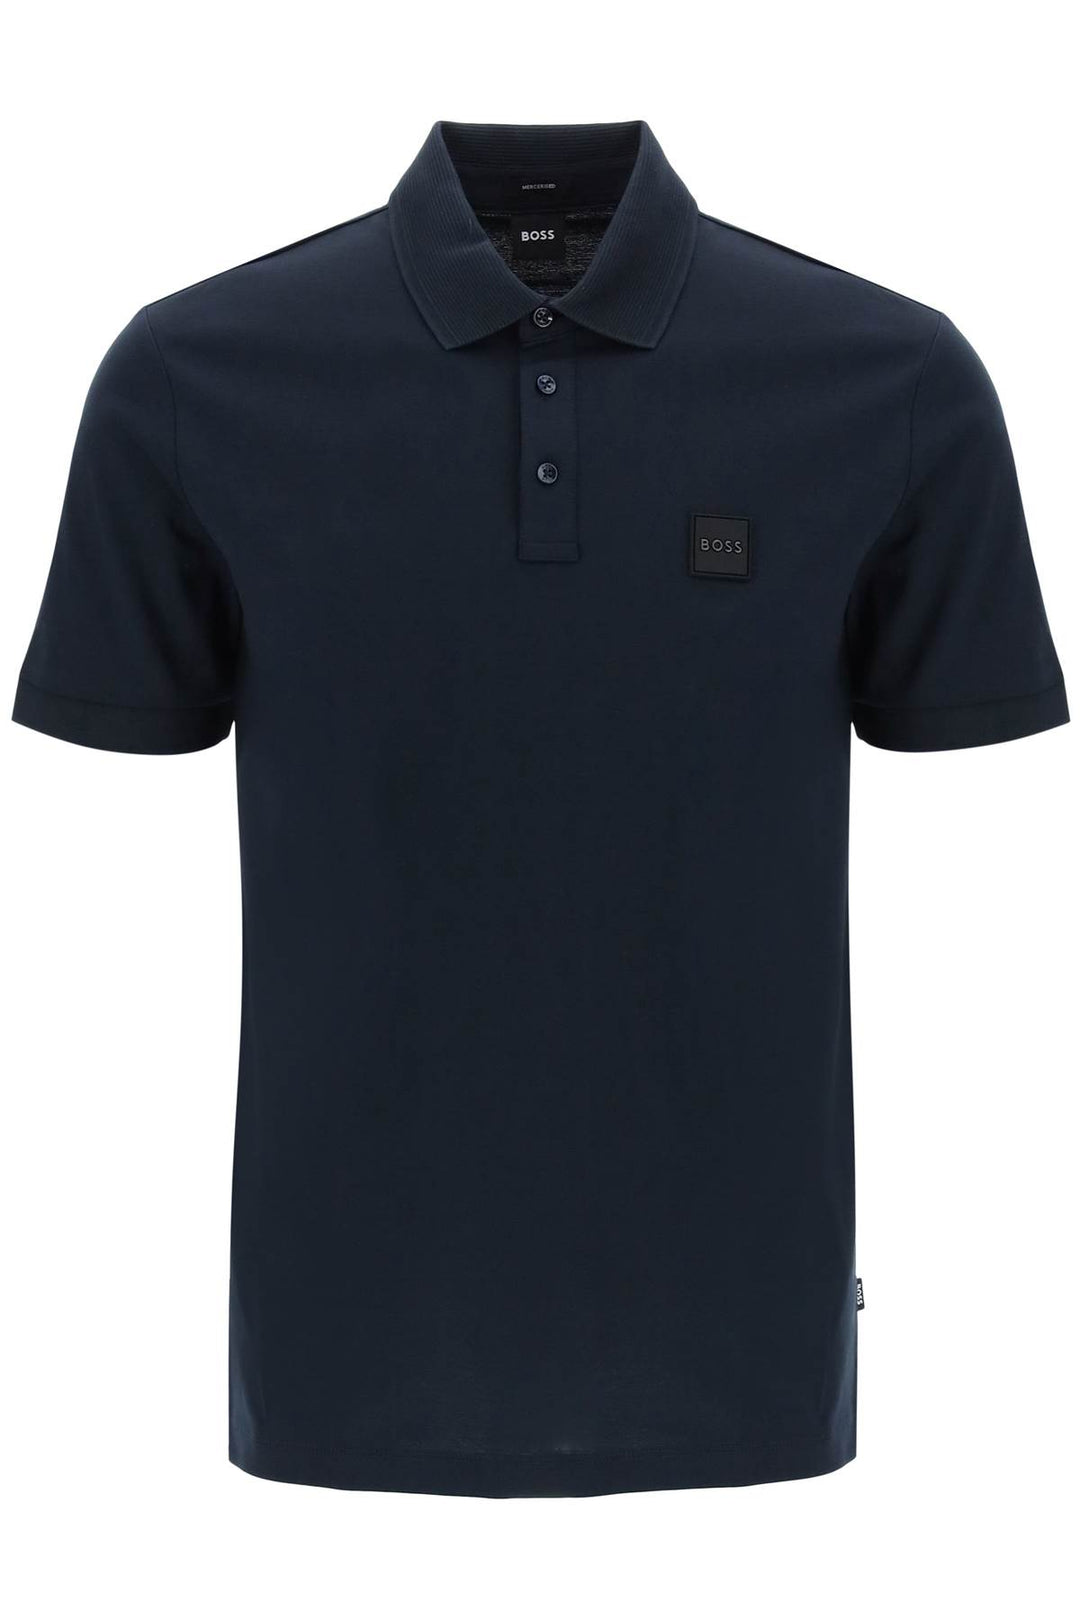 Boss Mercerized Cotton Polo Shirt   Blue